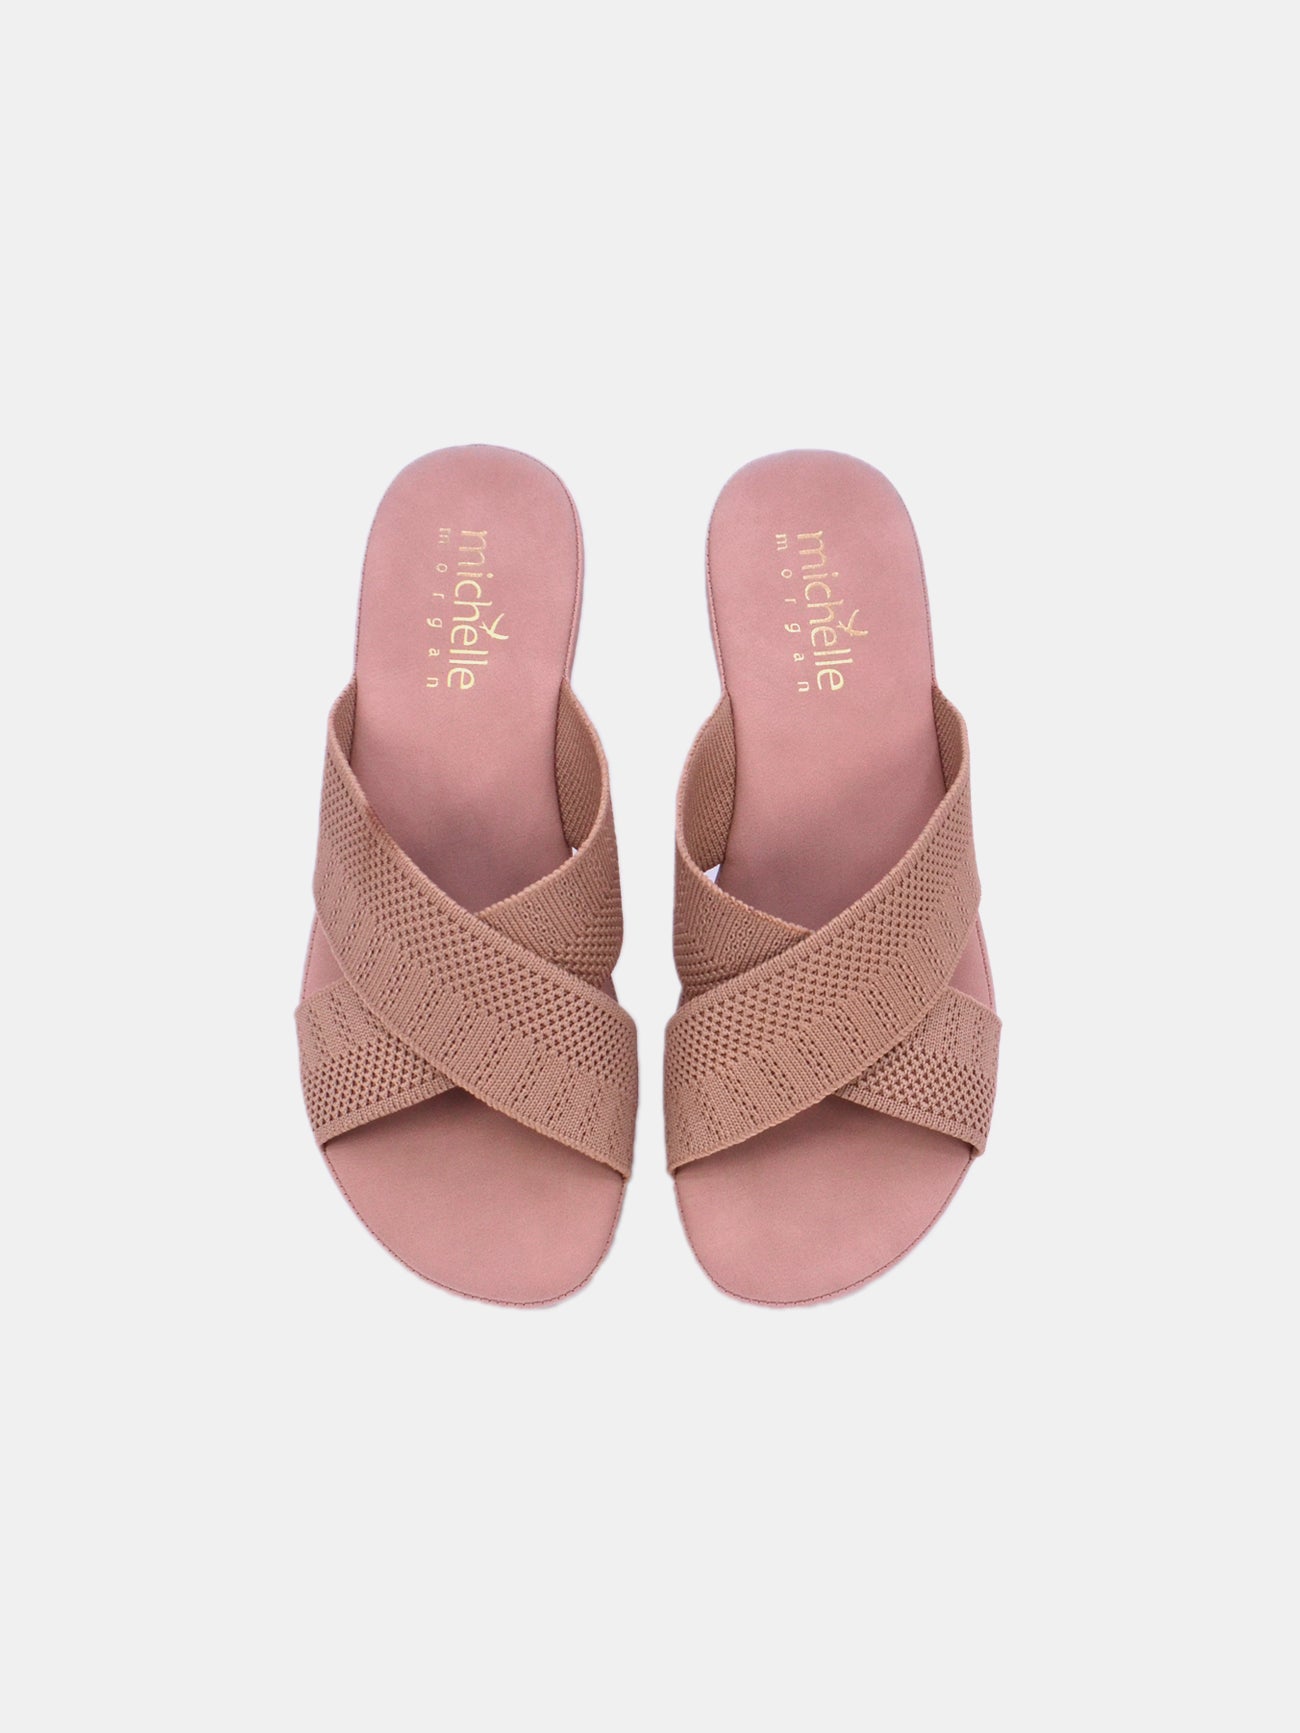 Michelle Morgan 214RJL16 Women's Heeled Sandals #color_Pink